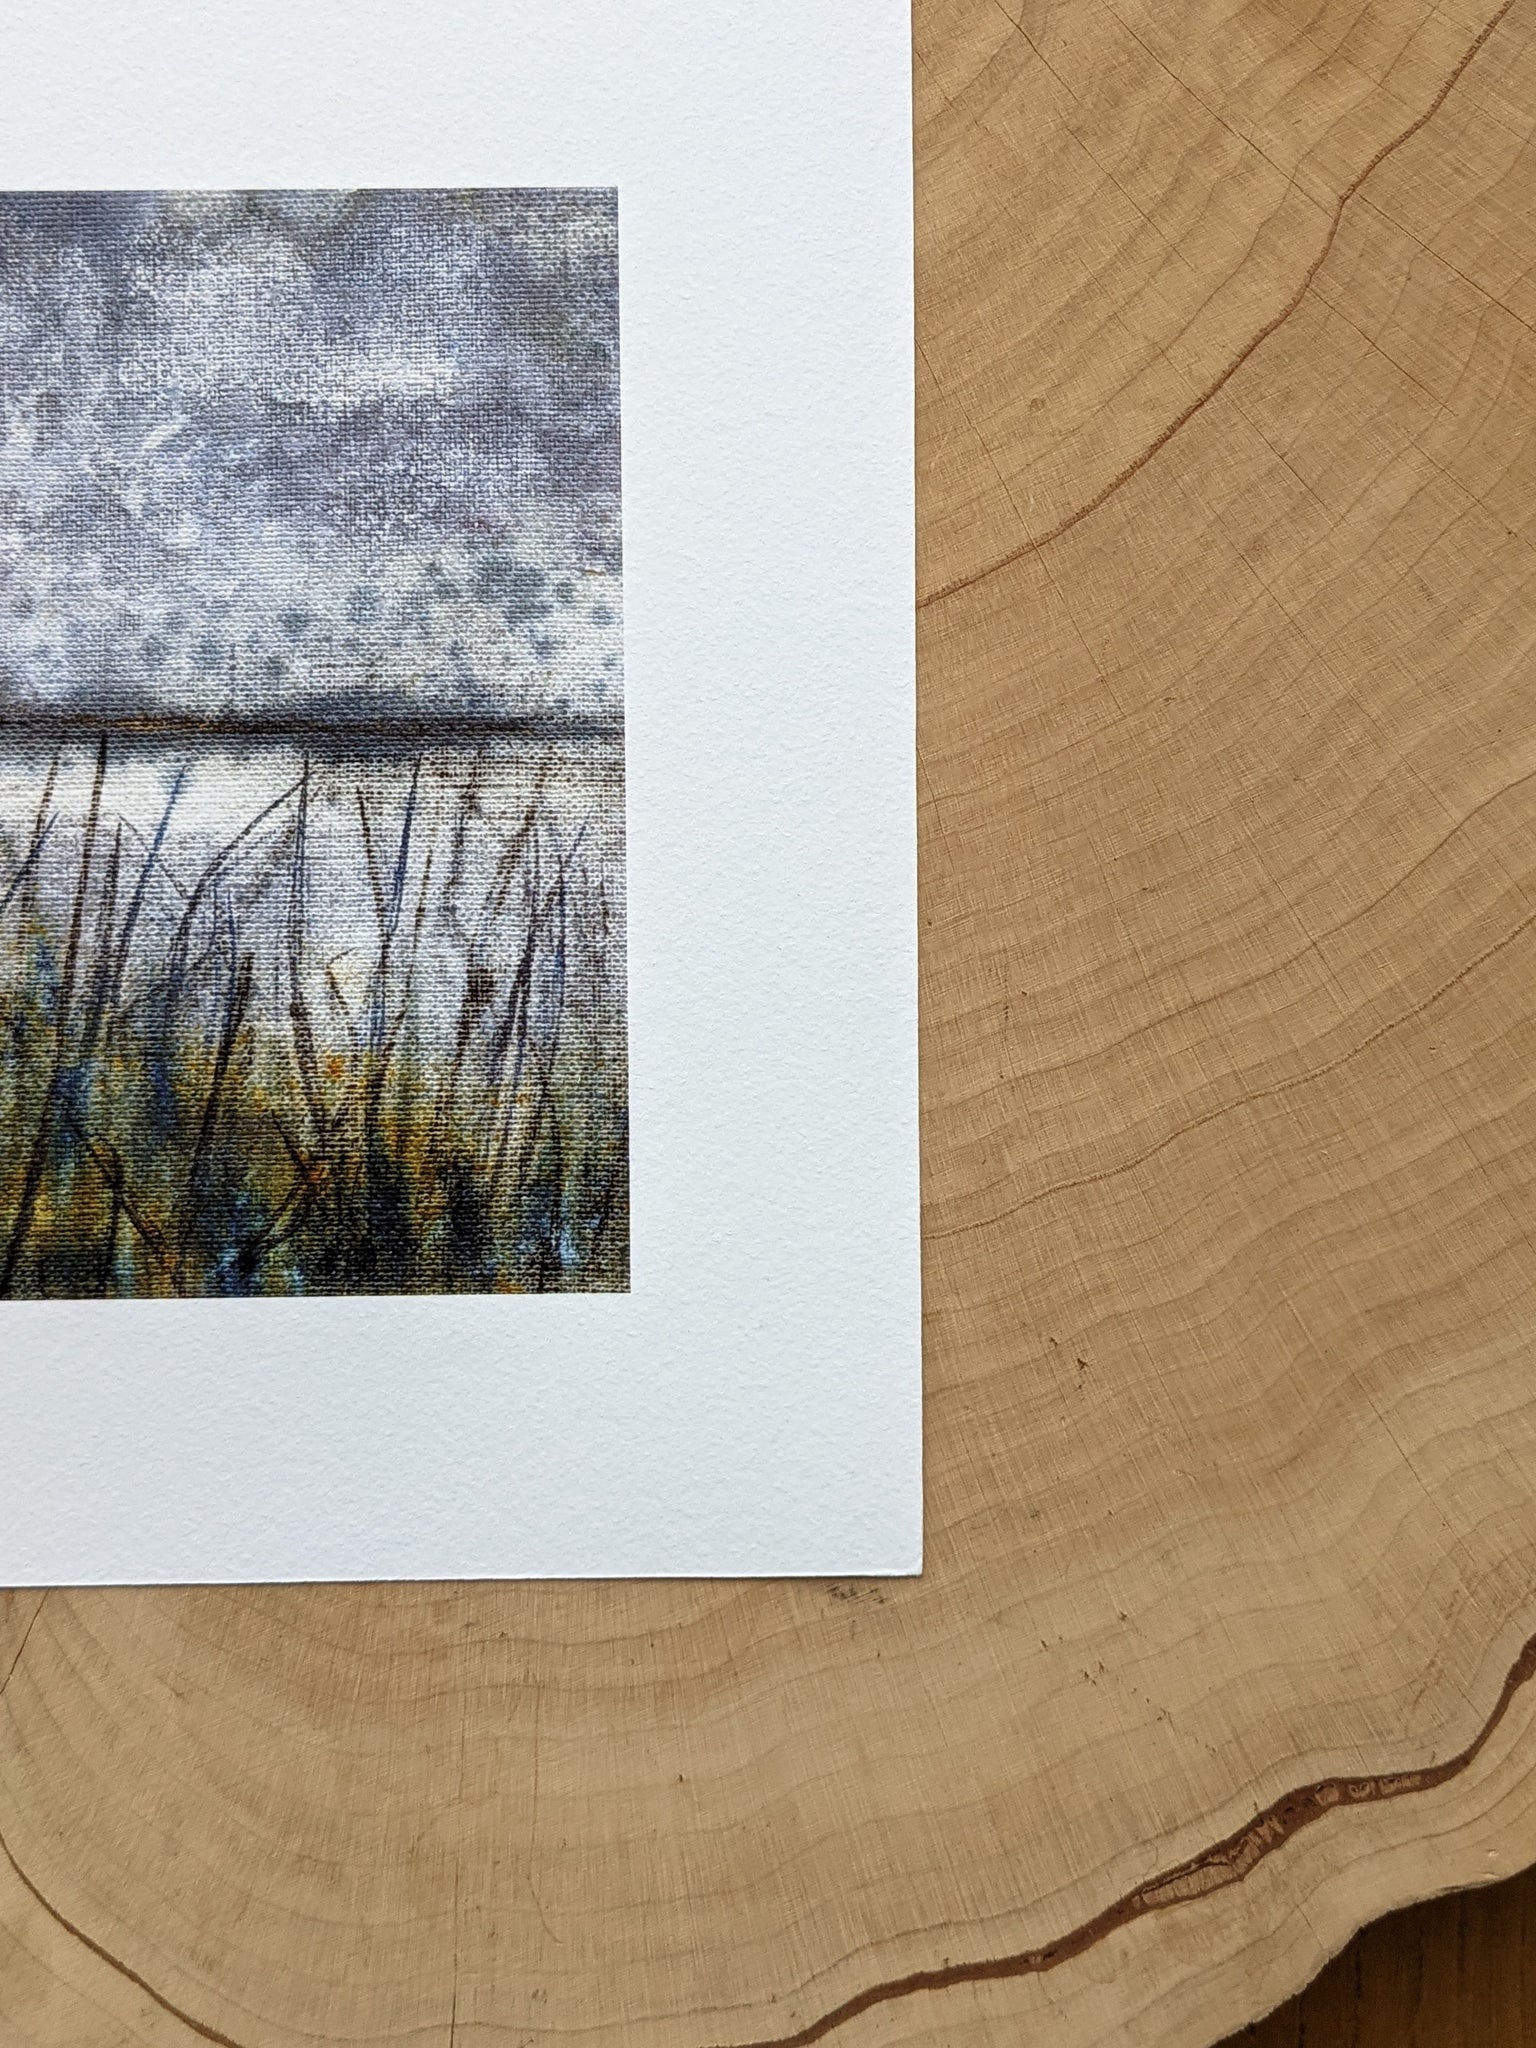 Ceobhrán/Drizzle- Strangford Lough Giclée Art Print